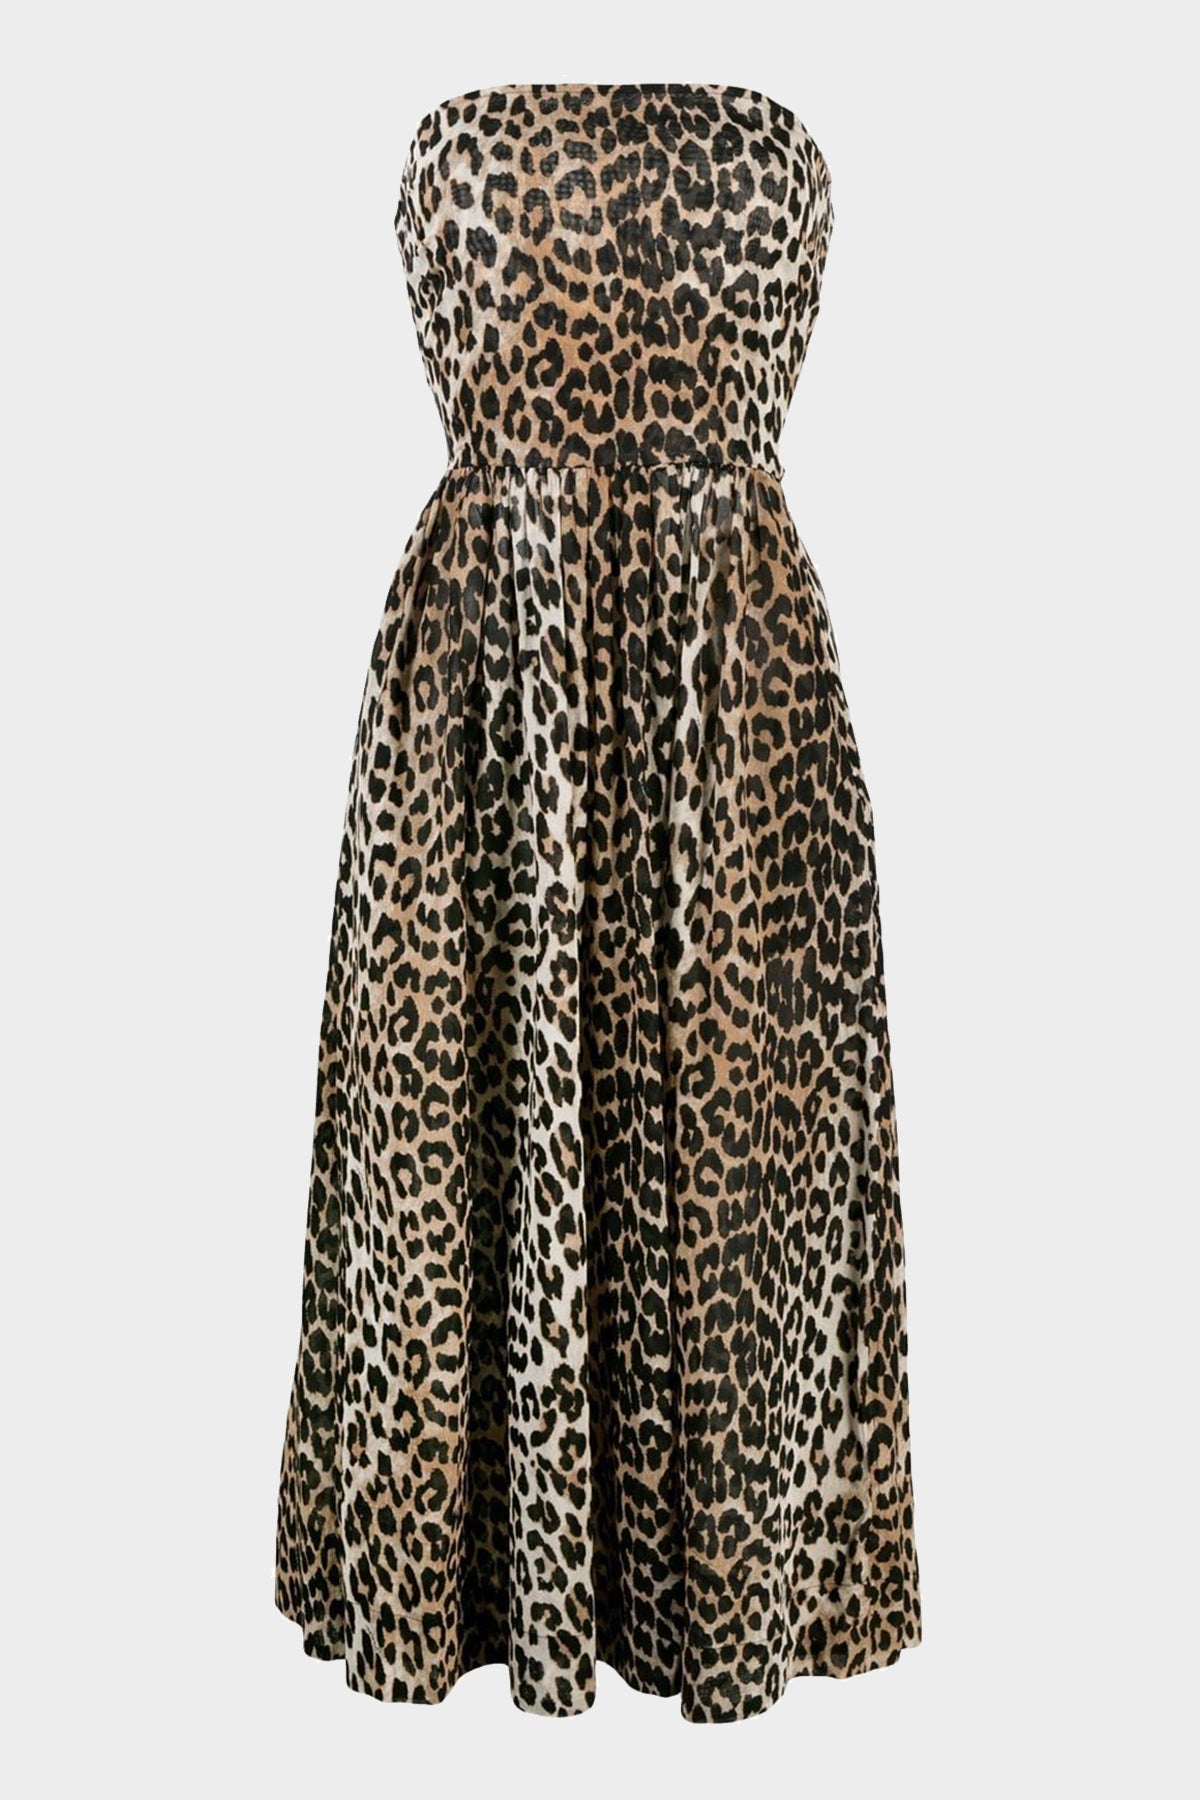 Tieband Multifunctional Dress in Leopard - shop-olivia.com